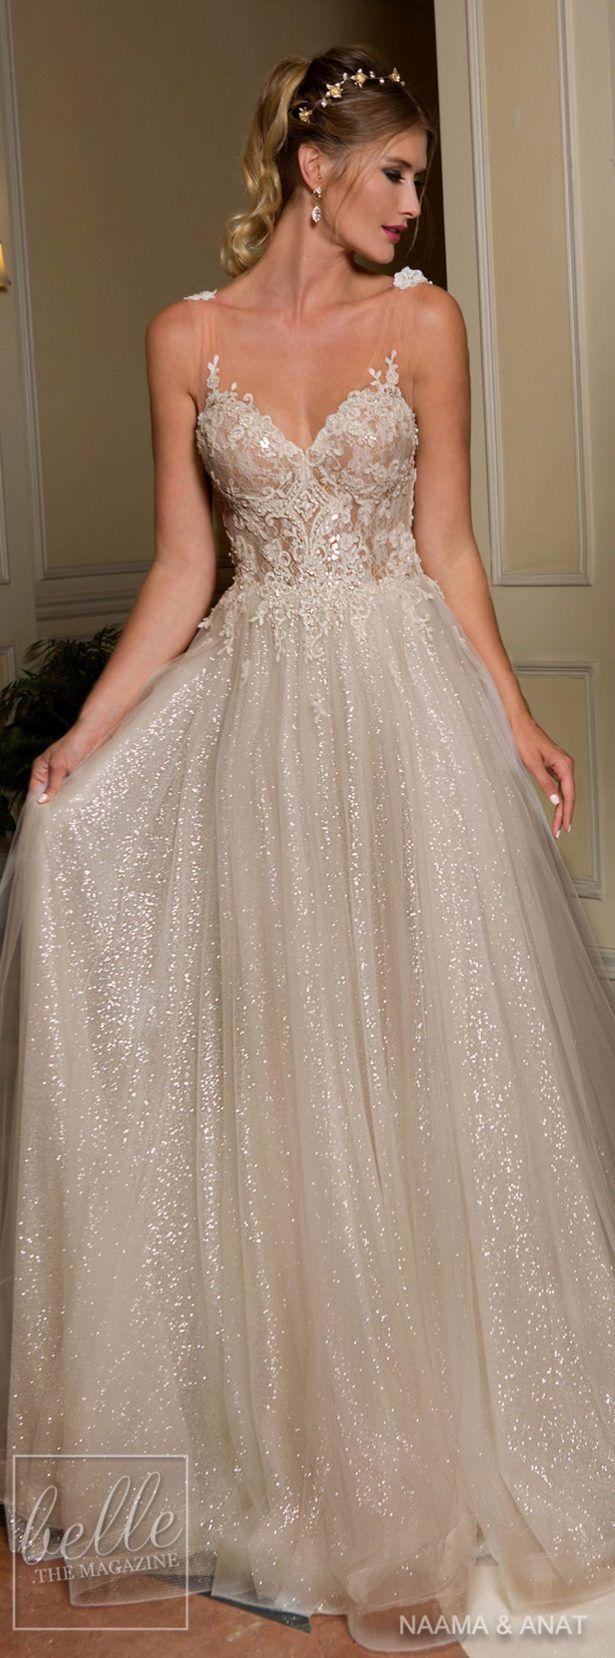 Mariage - Naama & Anat 2018 Wedding Dresses - "Starlight" Bridal Collection